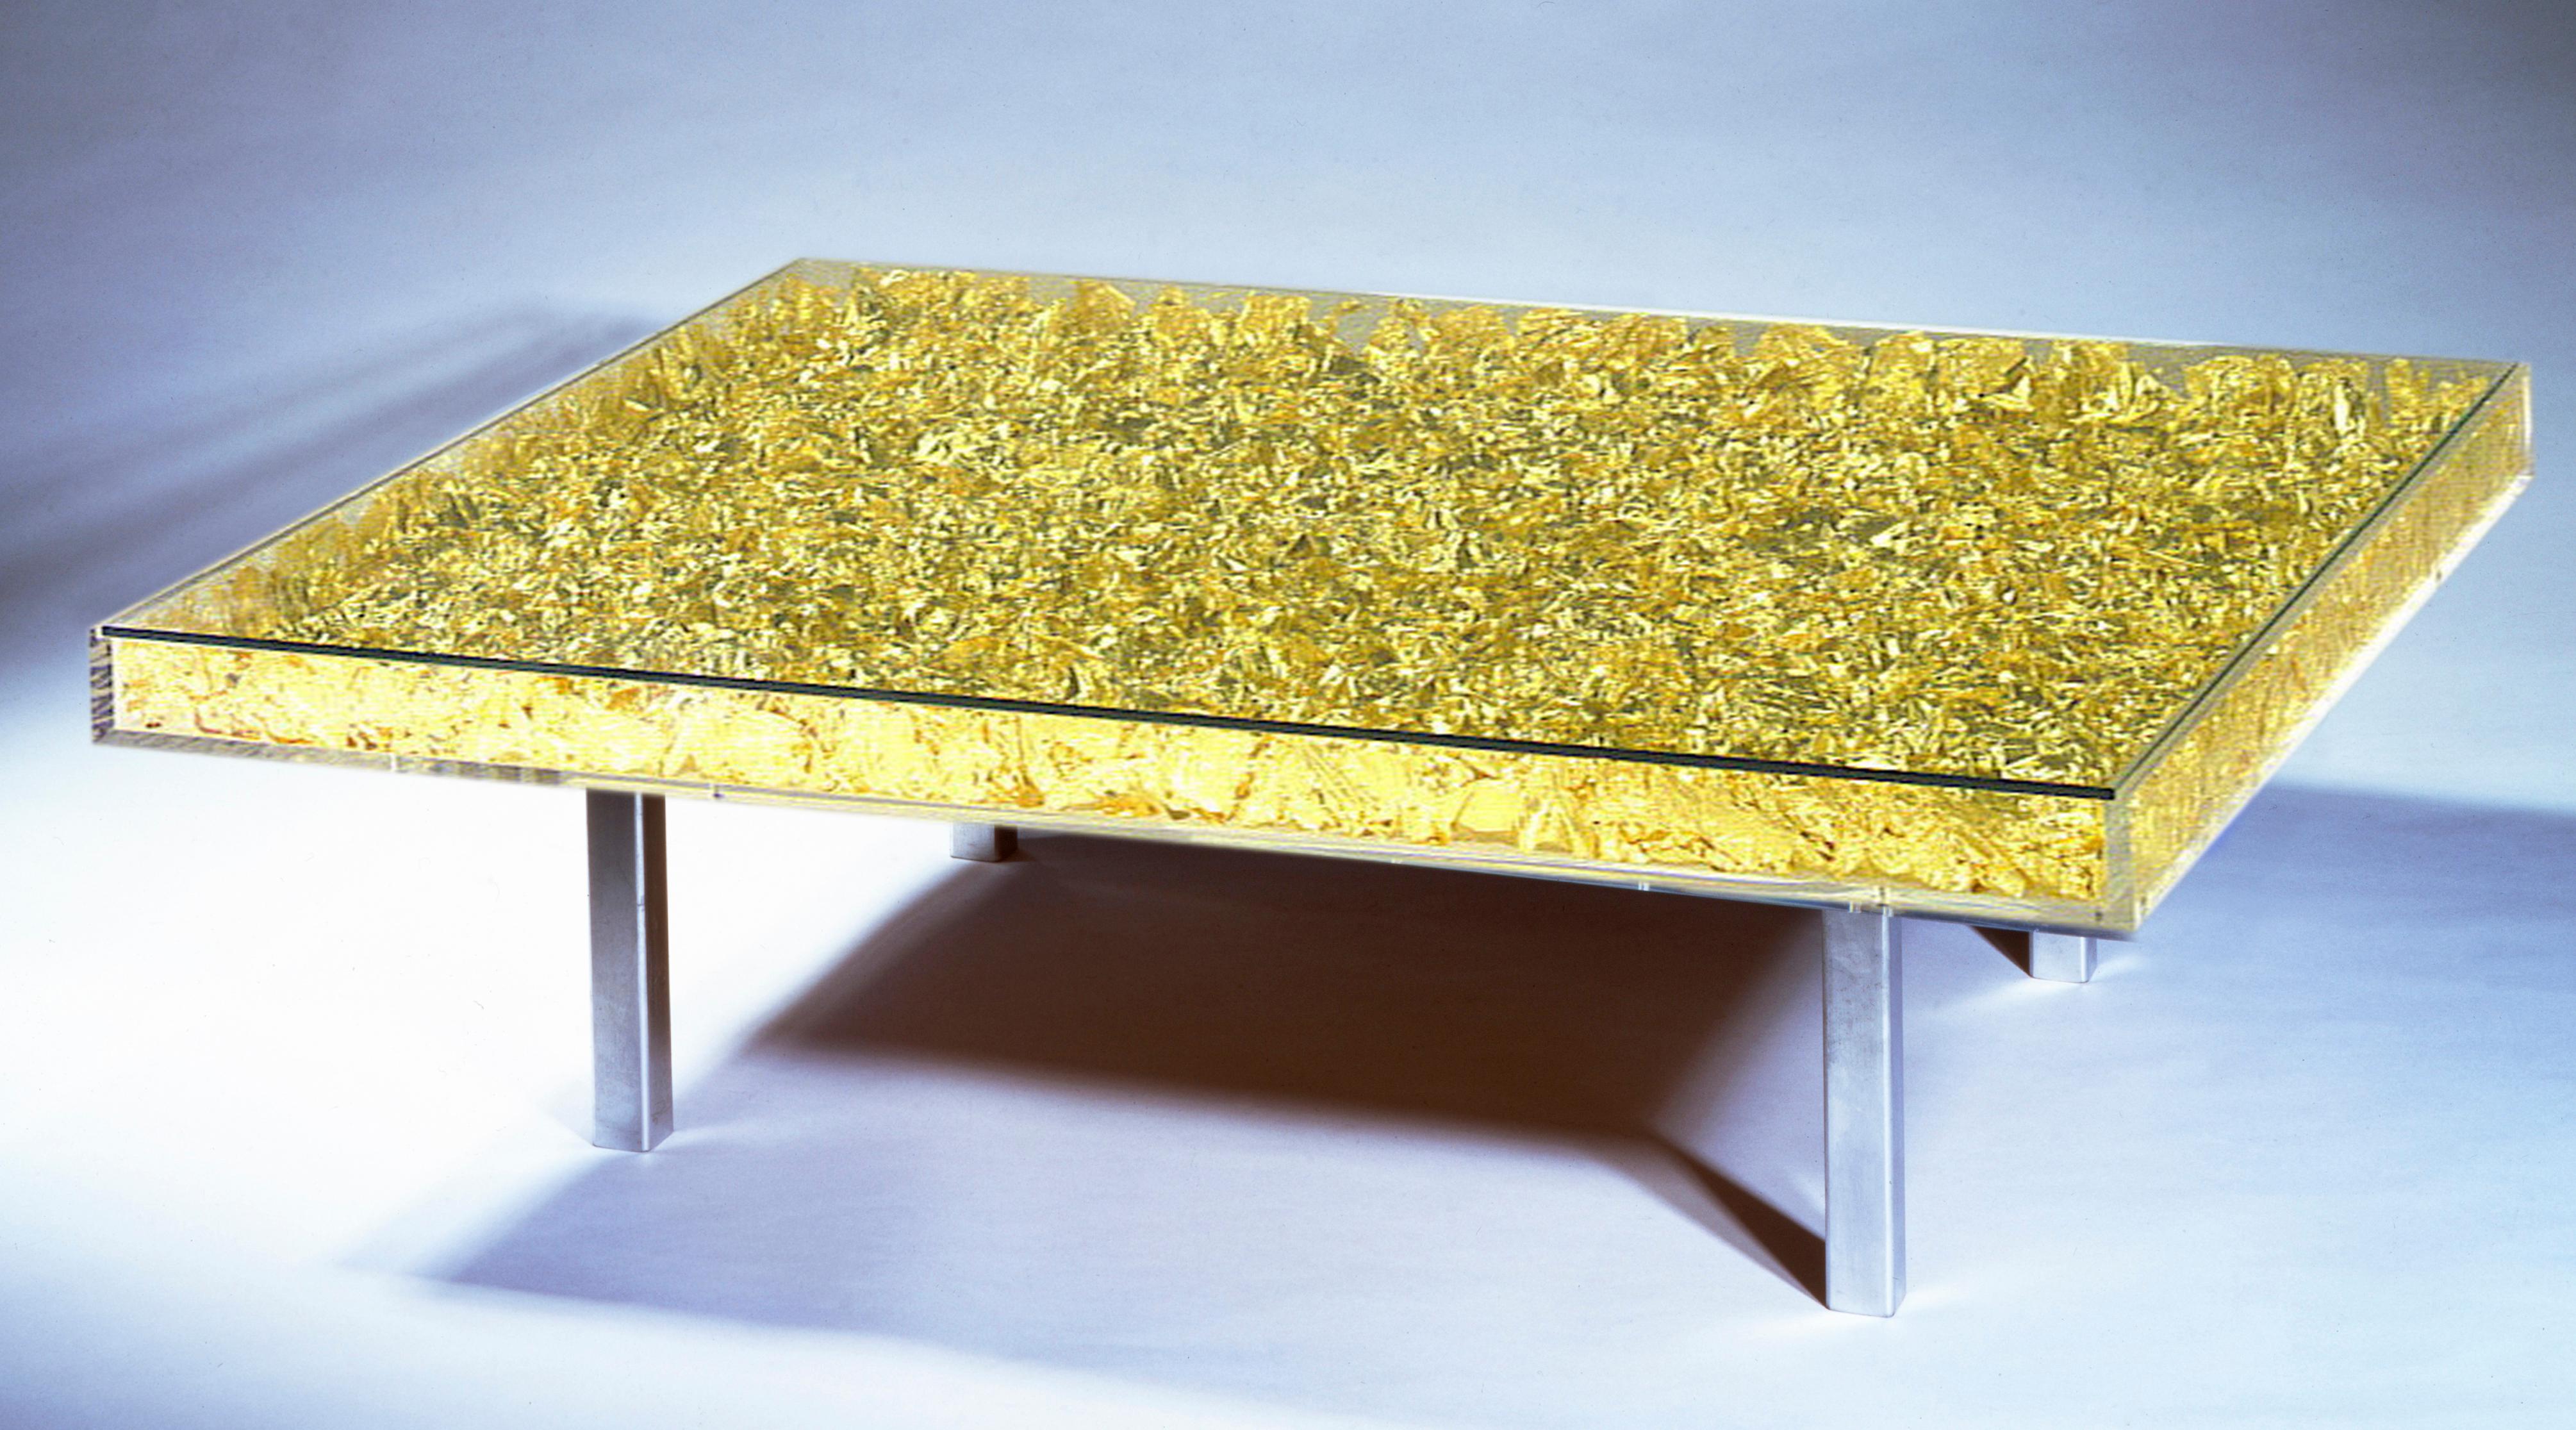 yves klein gold leaf table